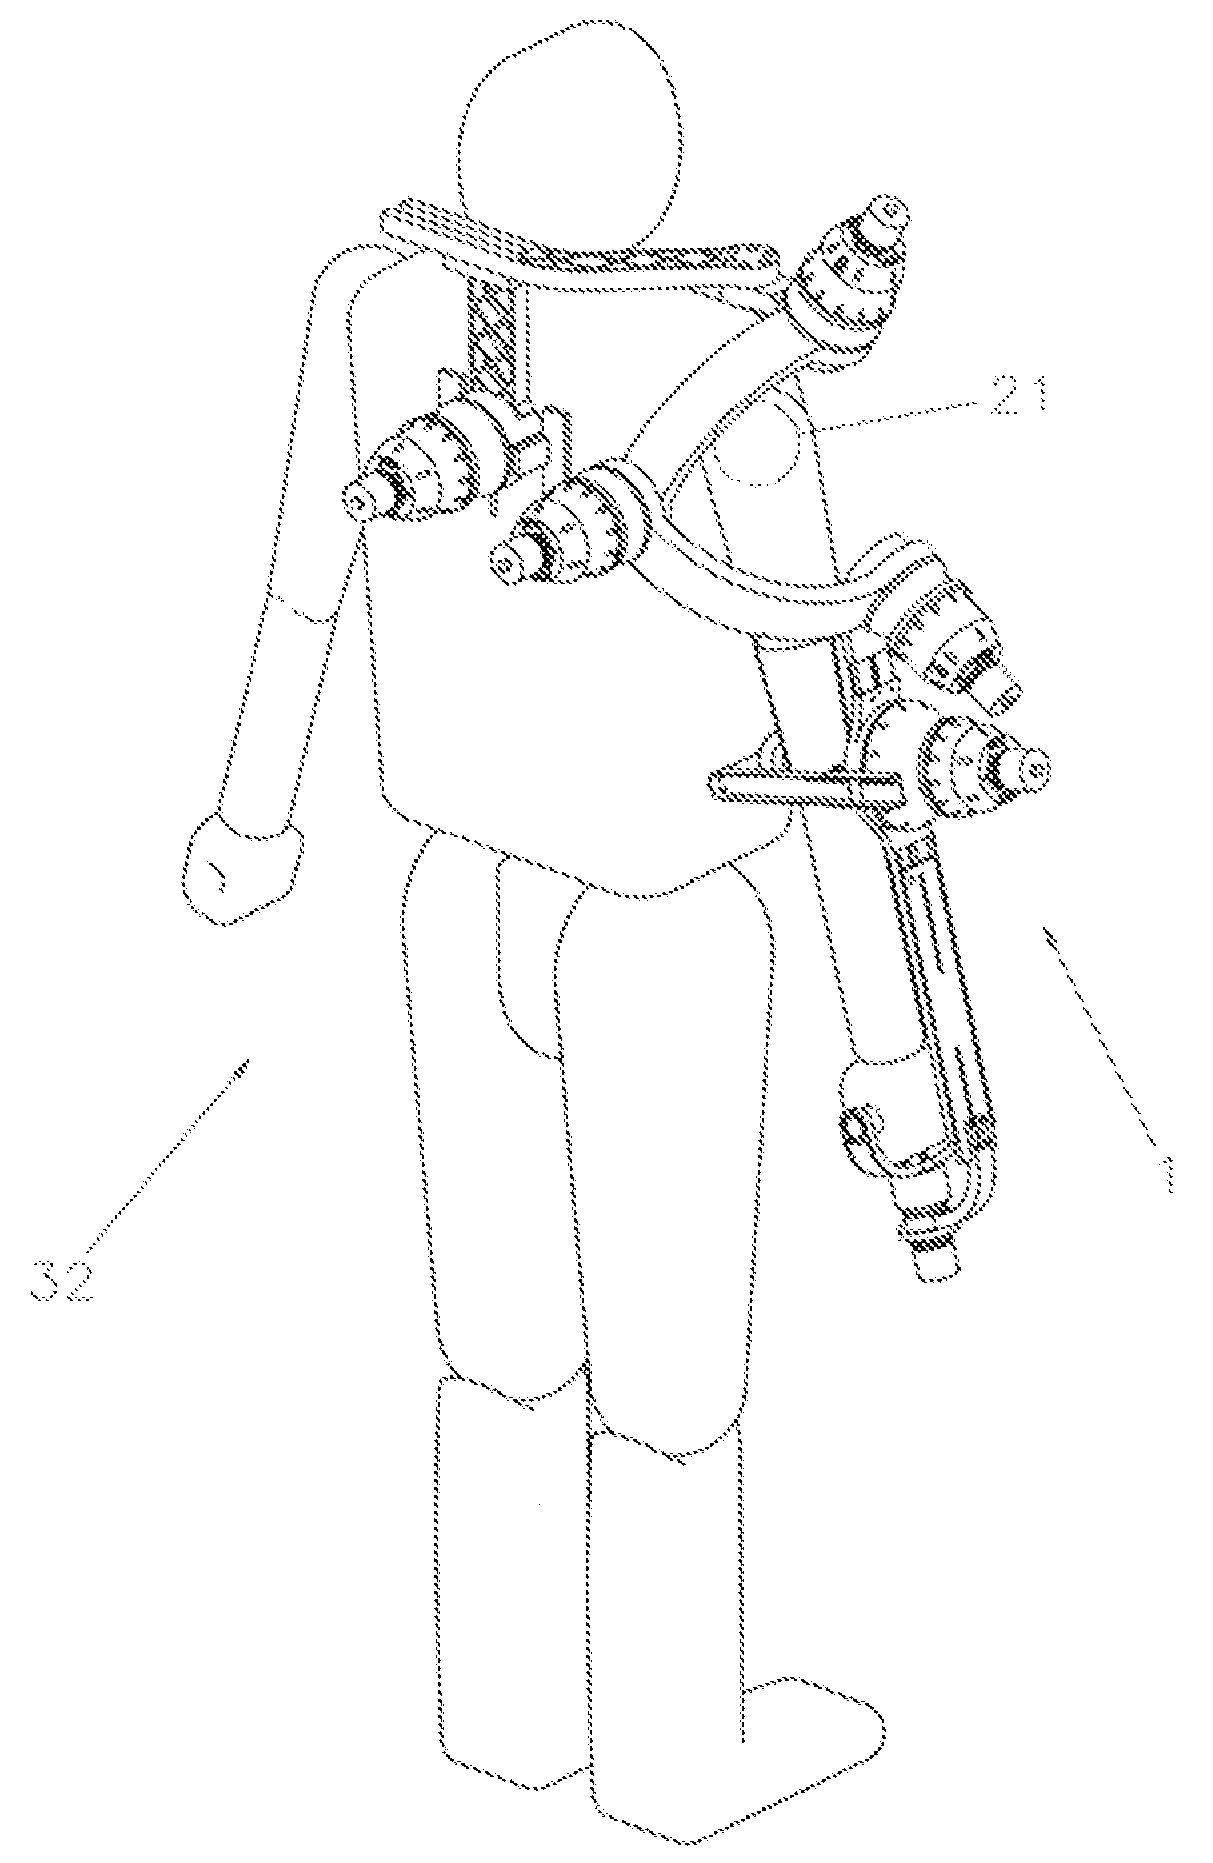 Portable Arm Exoskeleton for Shoulder Rehabilitation